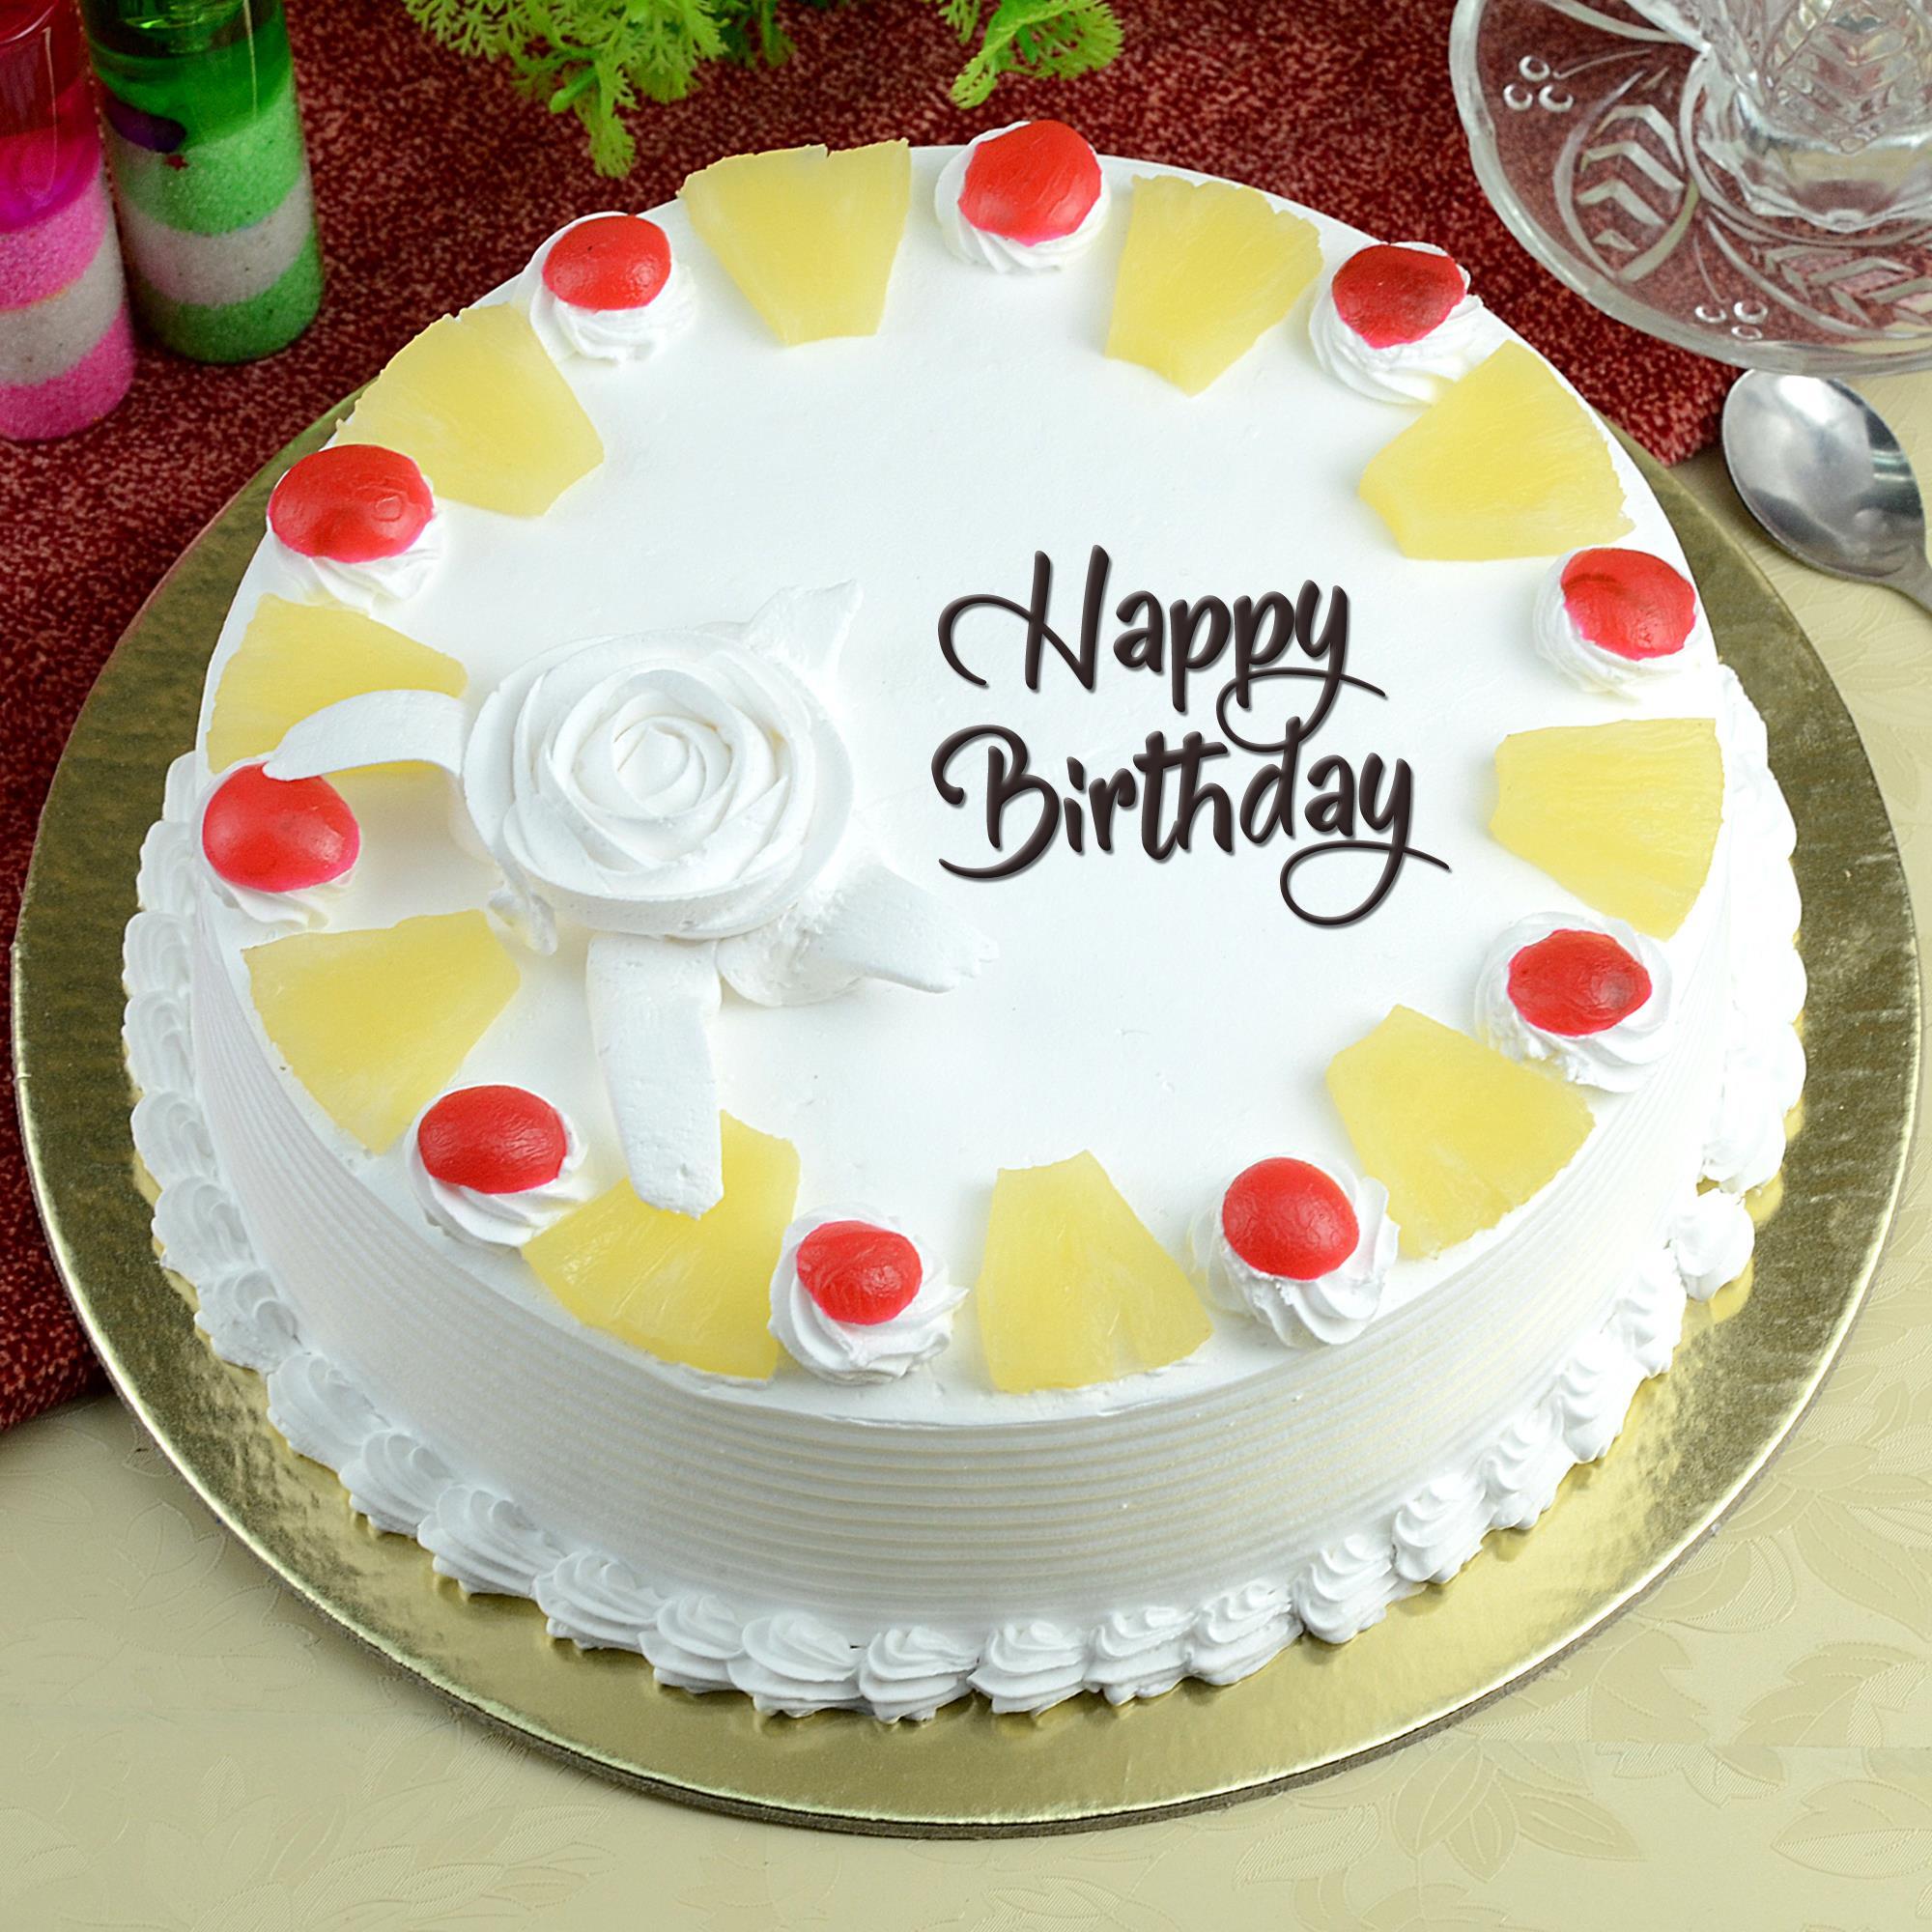 Dreamy Pineapple Cake- 1/2 Kg, Cakes on Birthdays